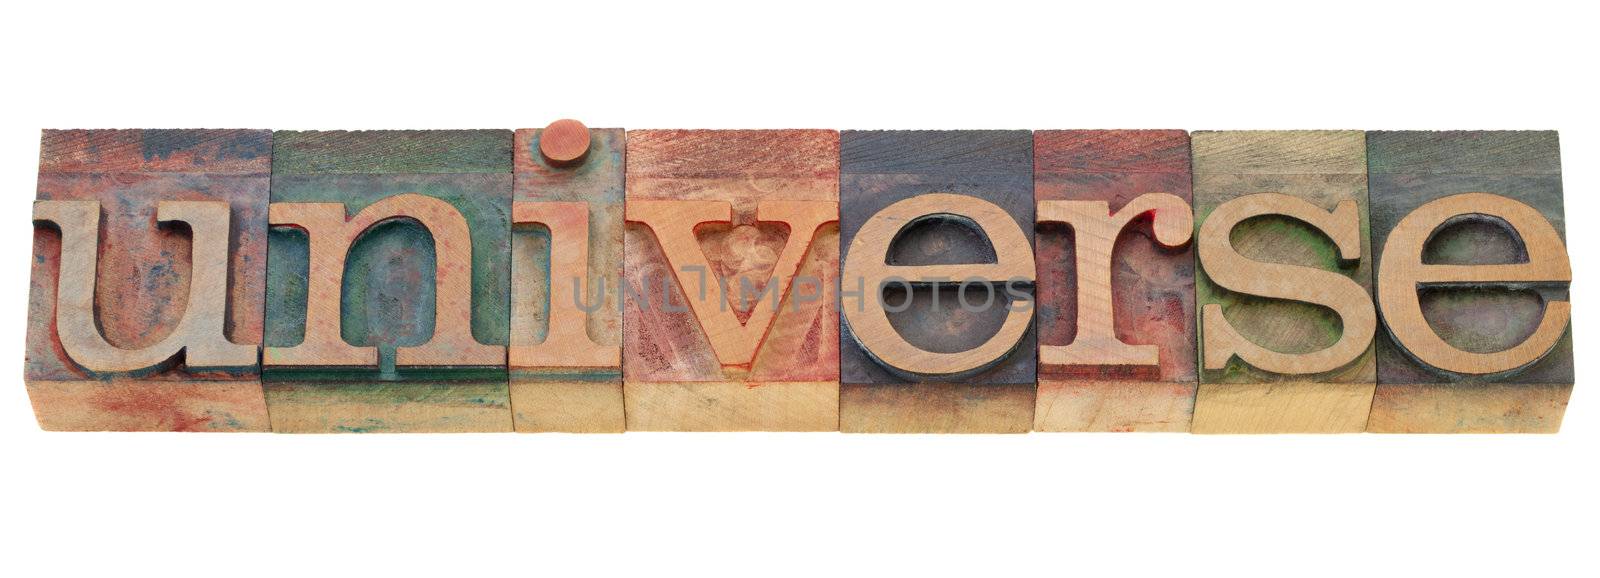 universe - isolated word in vintage wood letterpress printing blocks